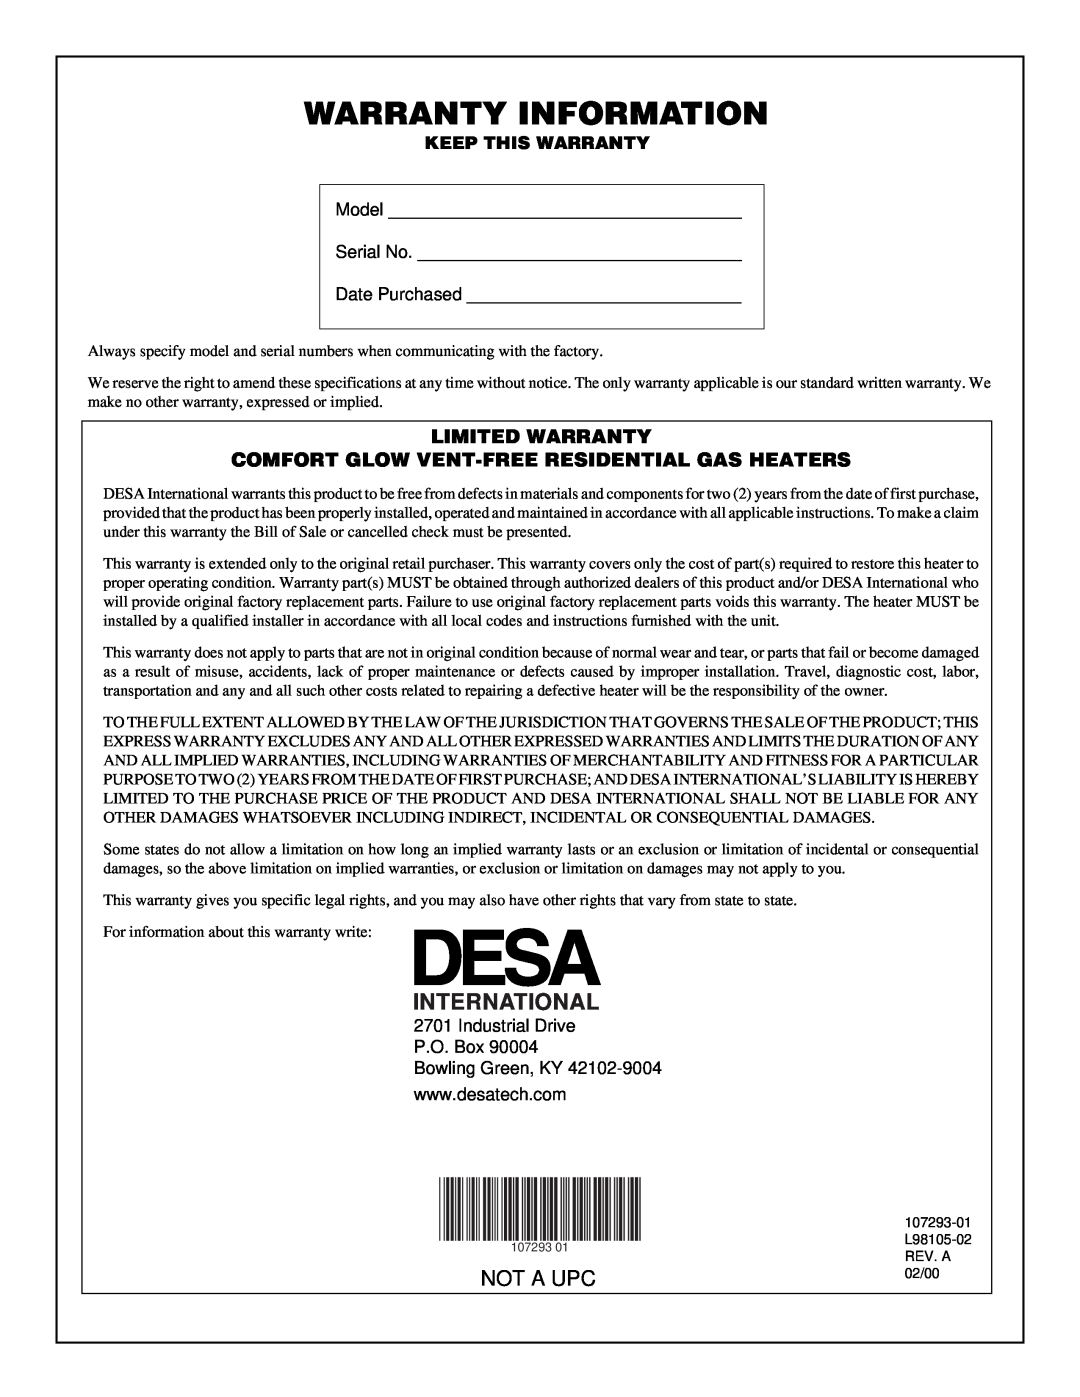 Desa CGR2P installation manual Warranty Information, International, Not A Upc, Model, Serial No, Date Purchased 